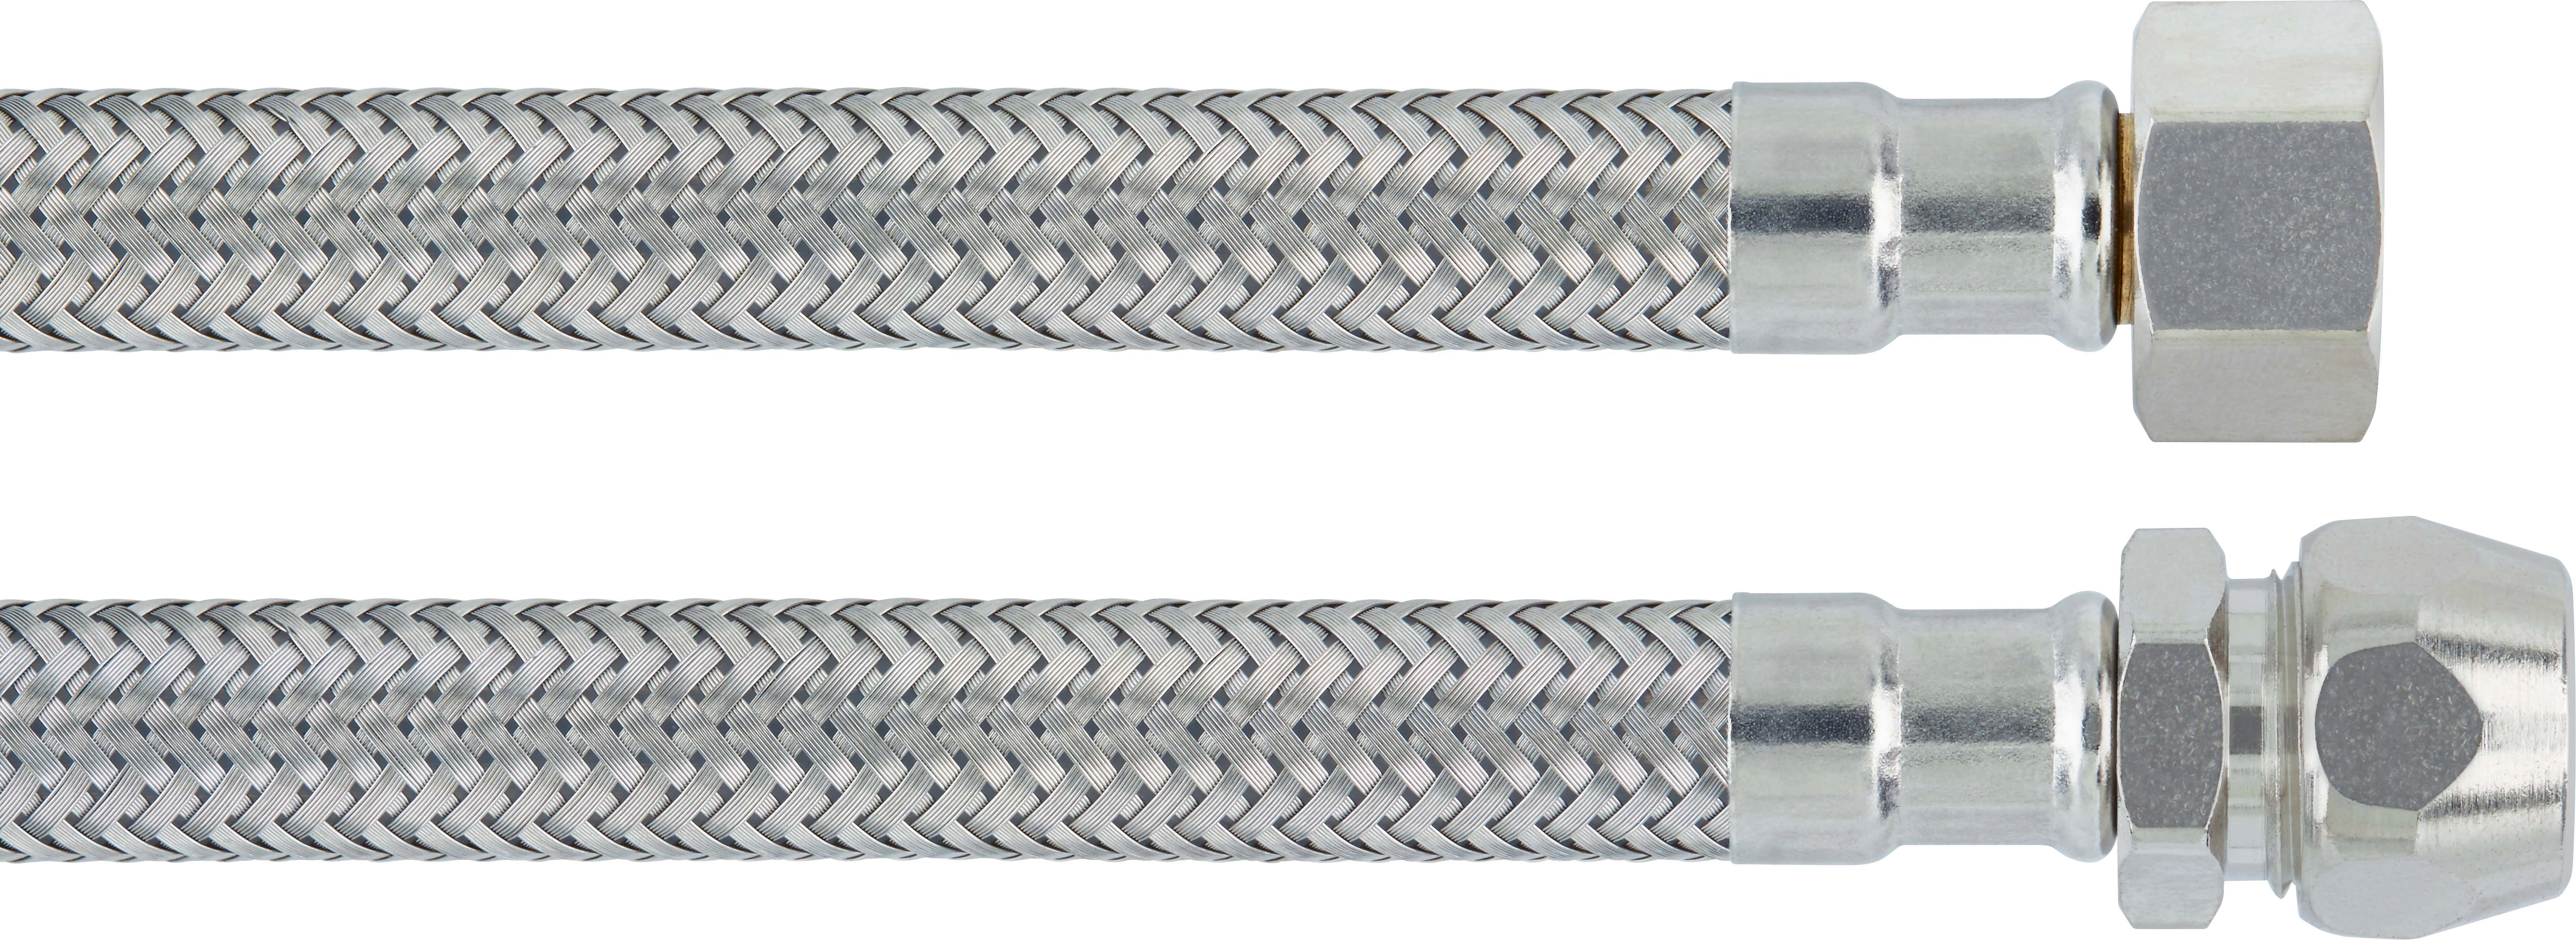 Raccord de tuyau de robinetterie flexible G 3/8 / 8 mm / longueur 300 mm